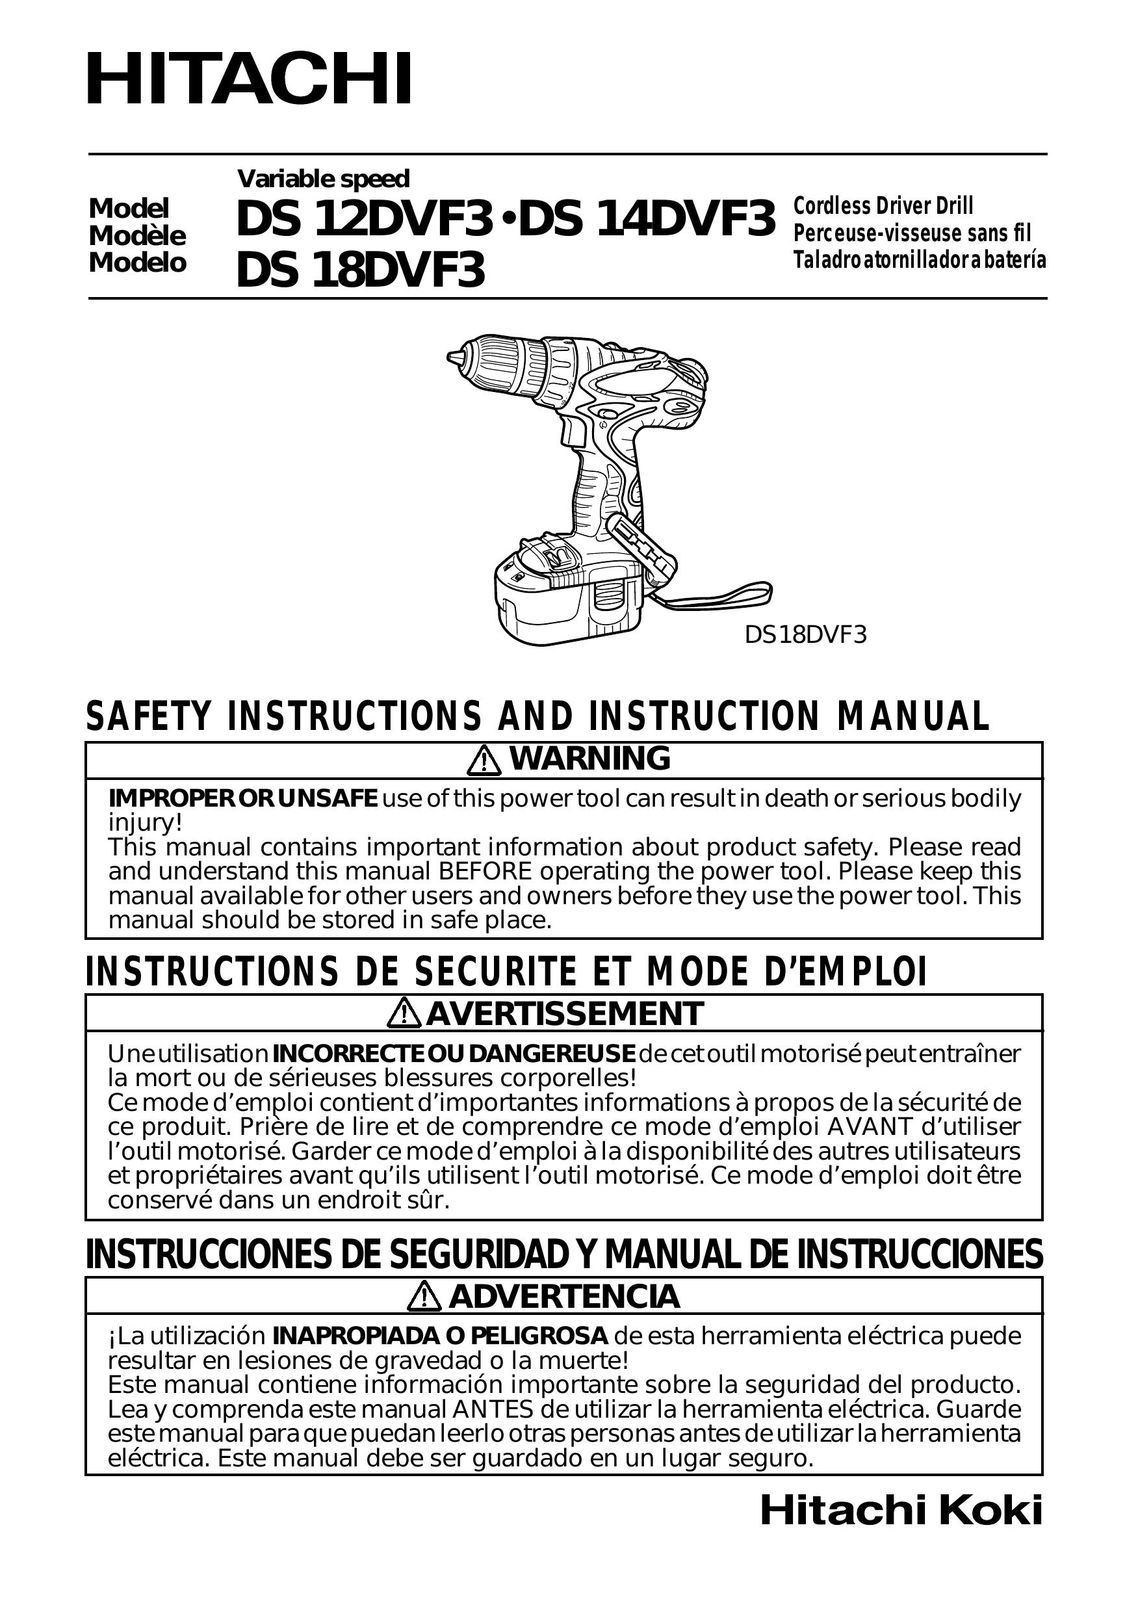 Hitachi DS 18DVF3 Cordless Drill User Manual